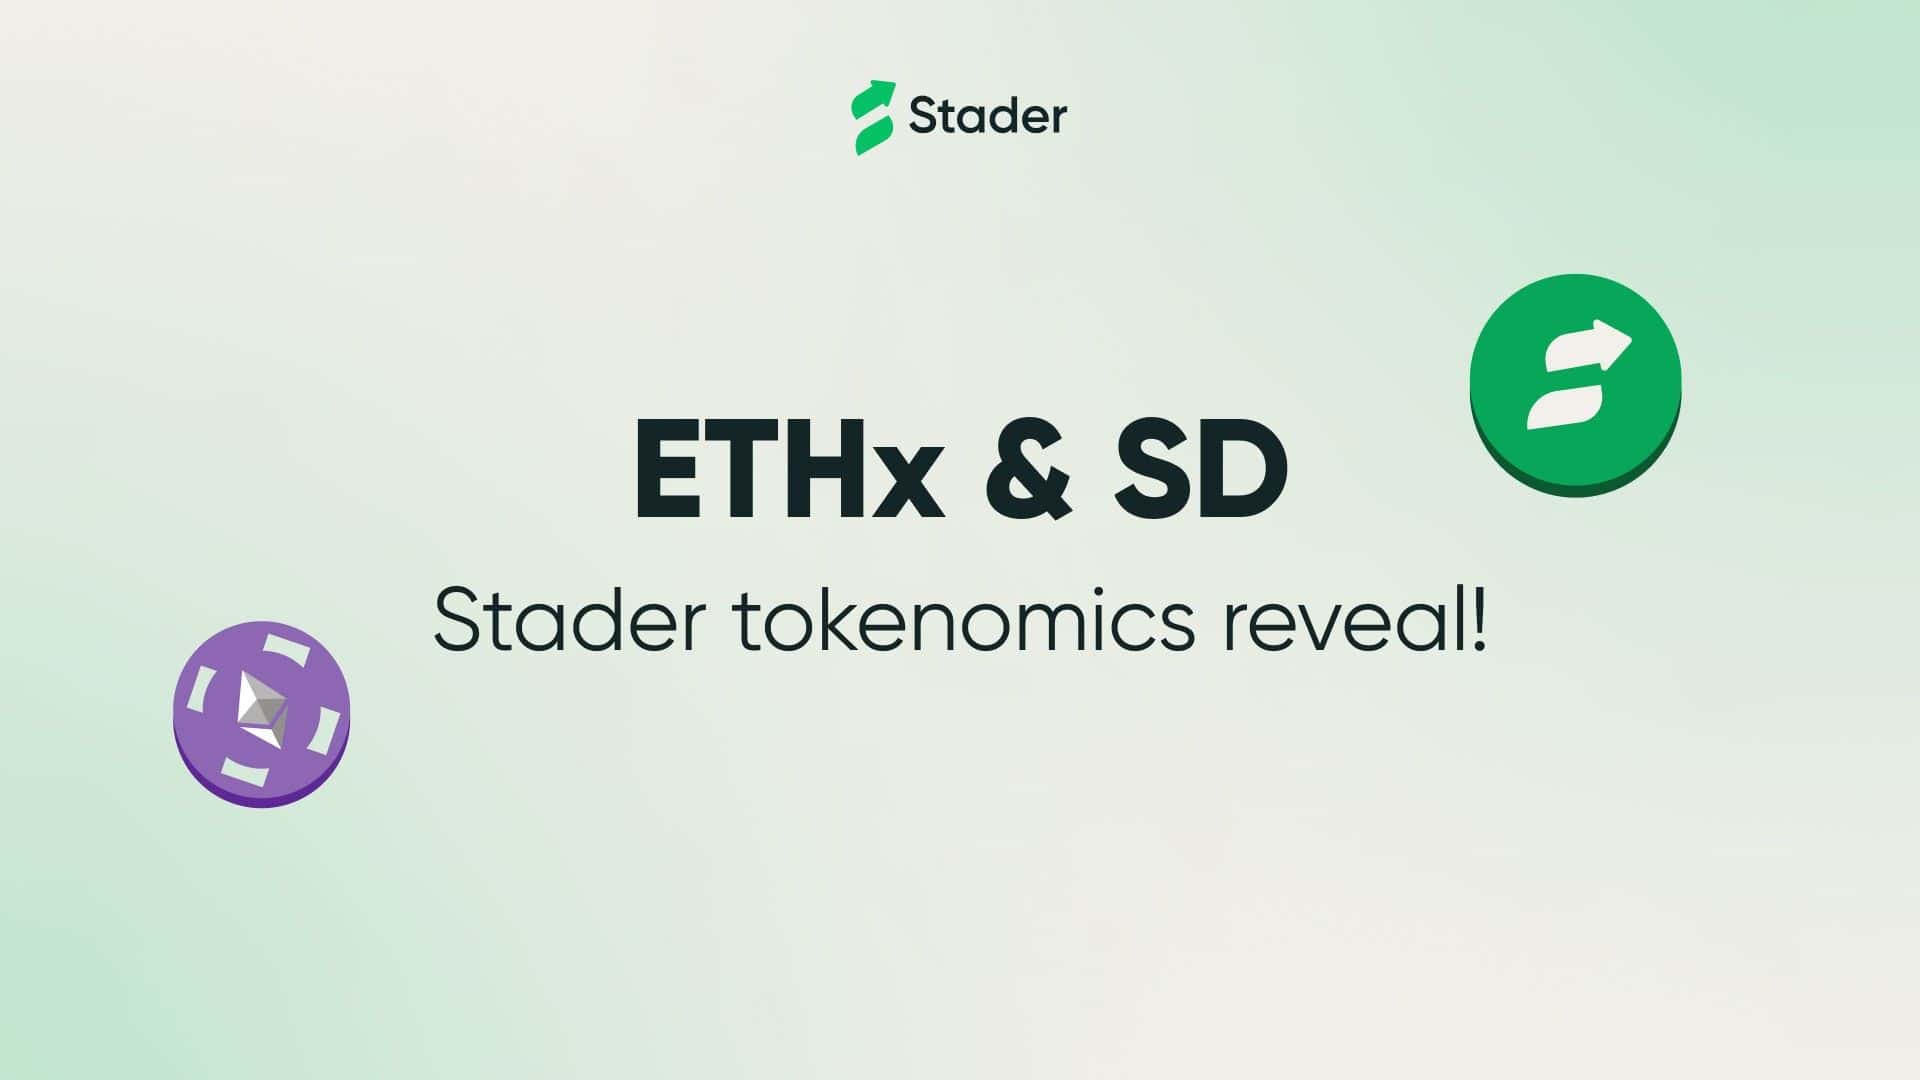 ETHx & SD: Stader’s node operator-centric tokenomics